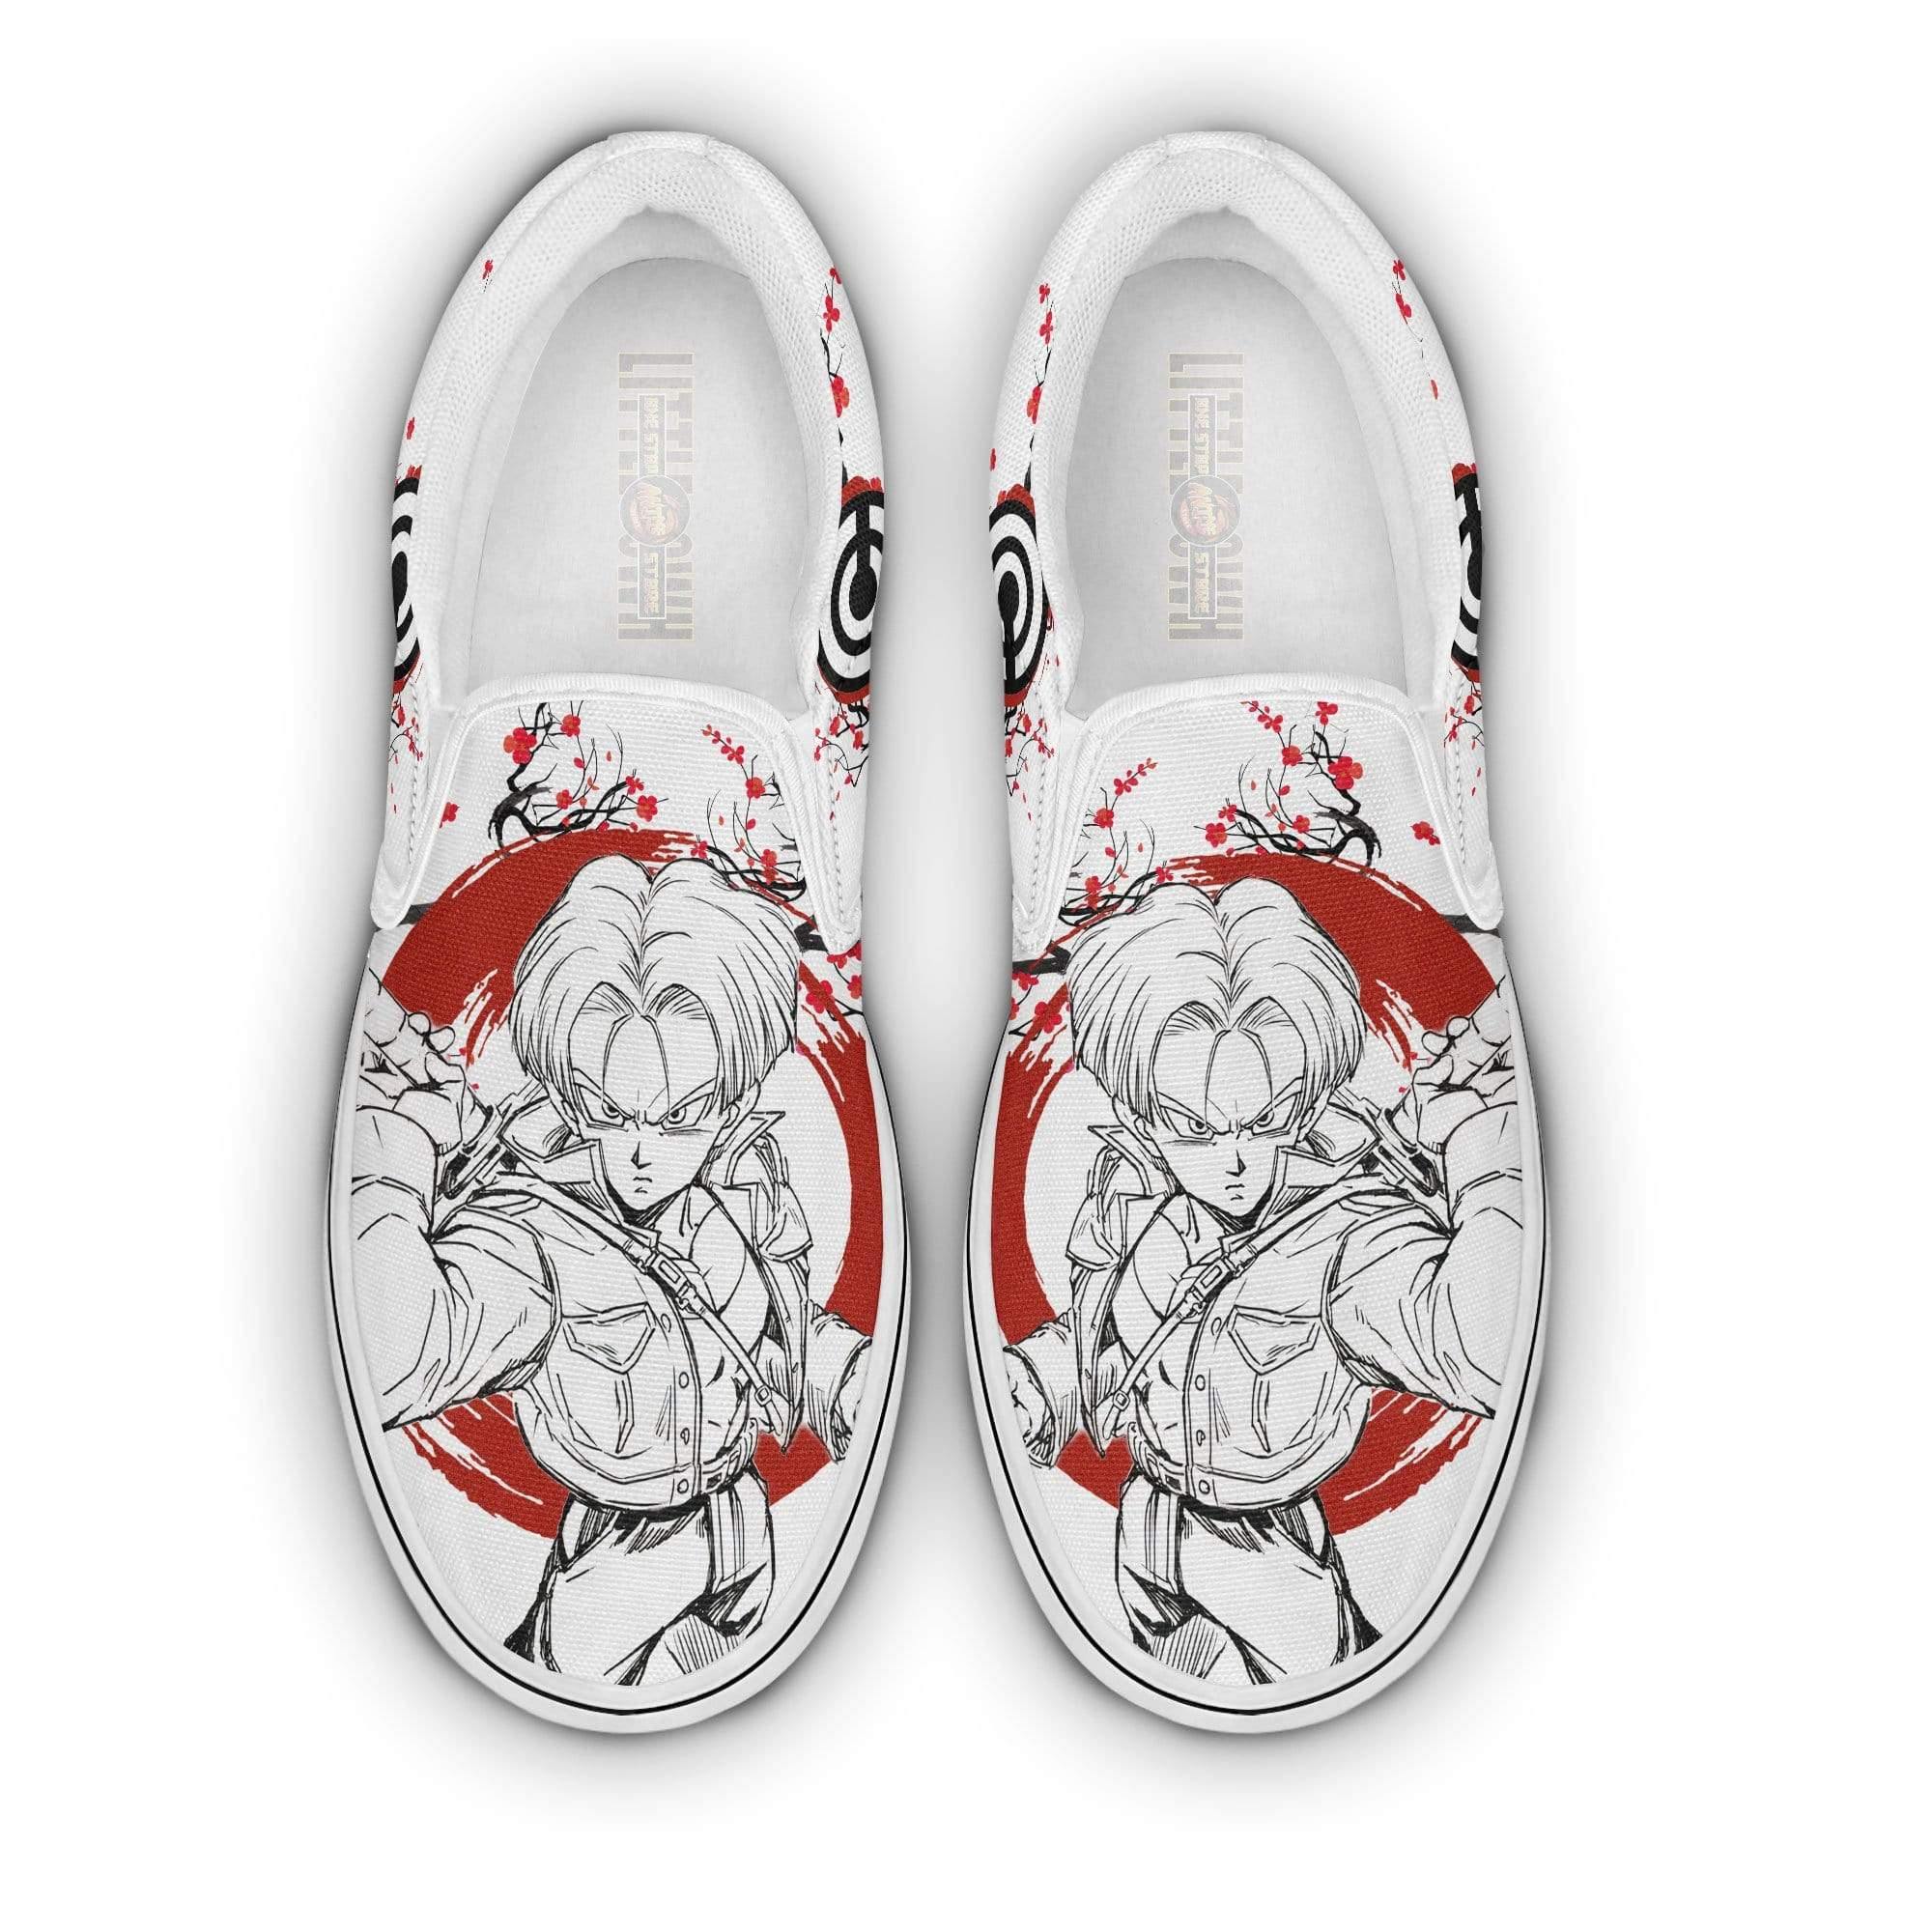 Dragon Ball Z Sneakers Future Trunks Anime Shoes Custom Classic Slip-On